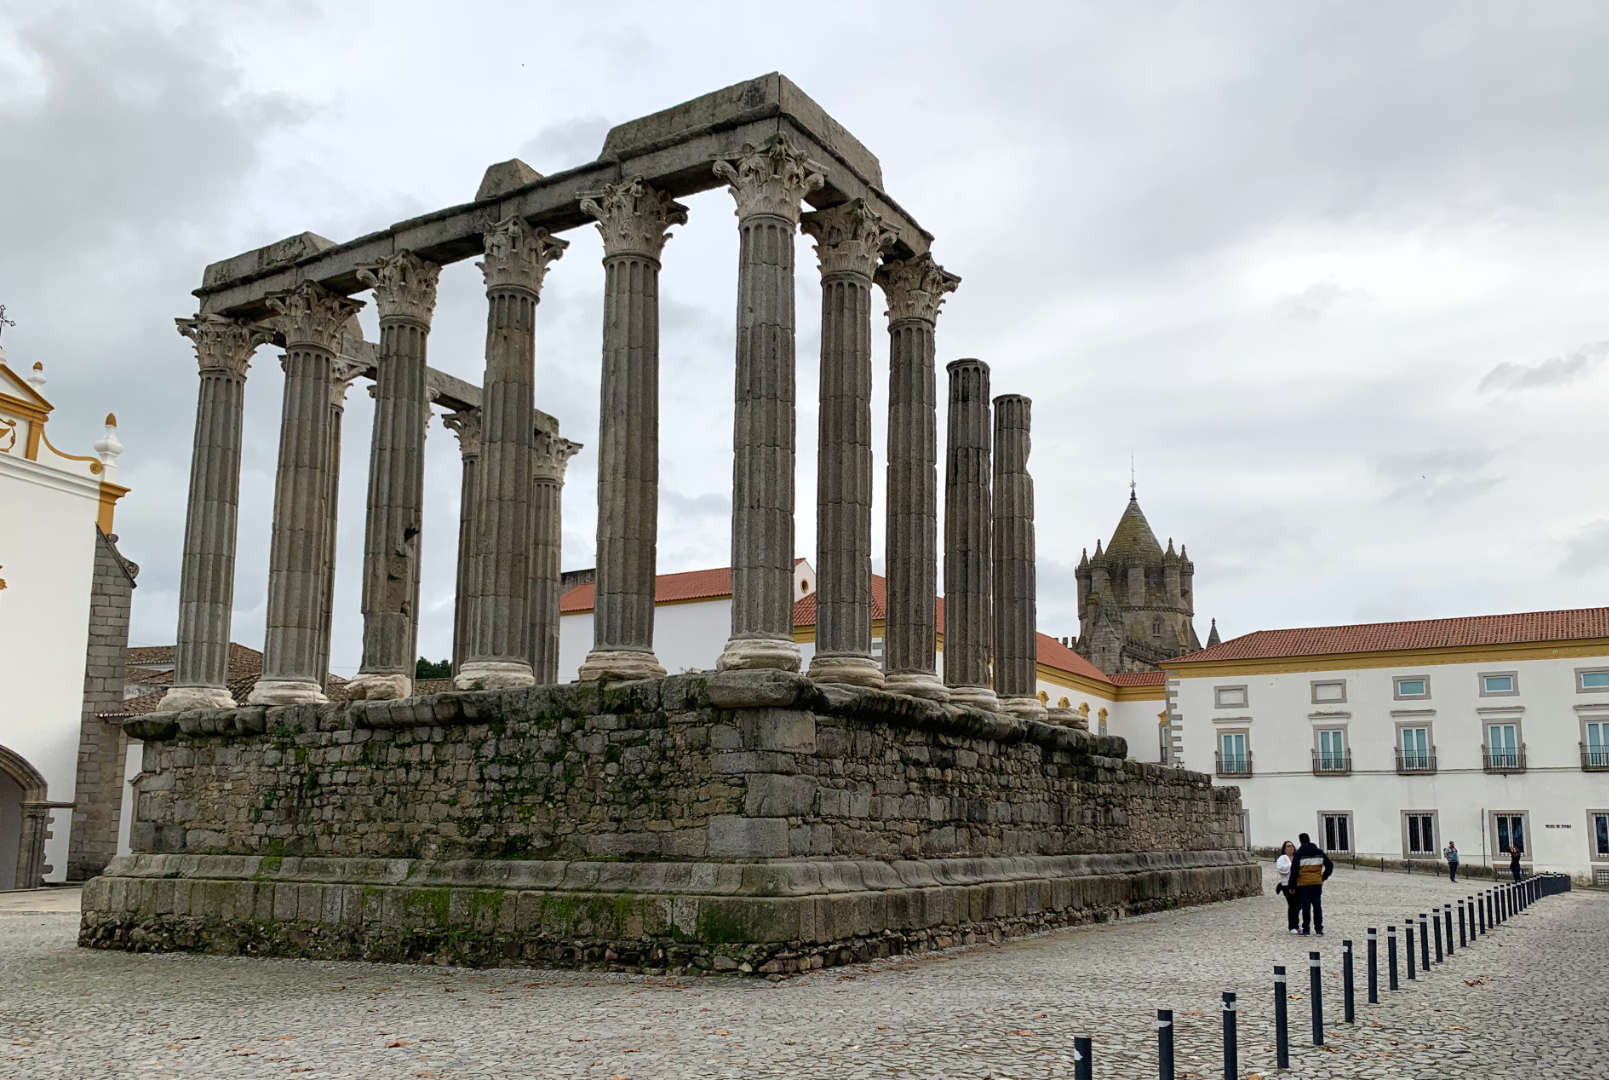 Évora's top highlight might be this fantastic Roman column structure.